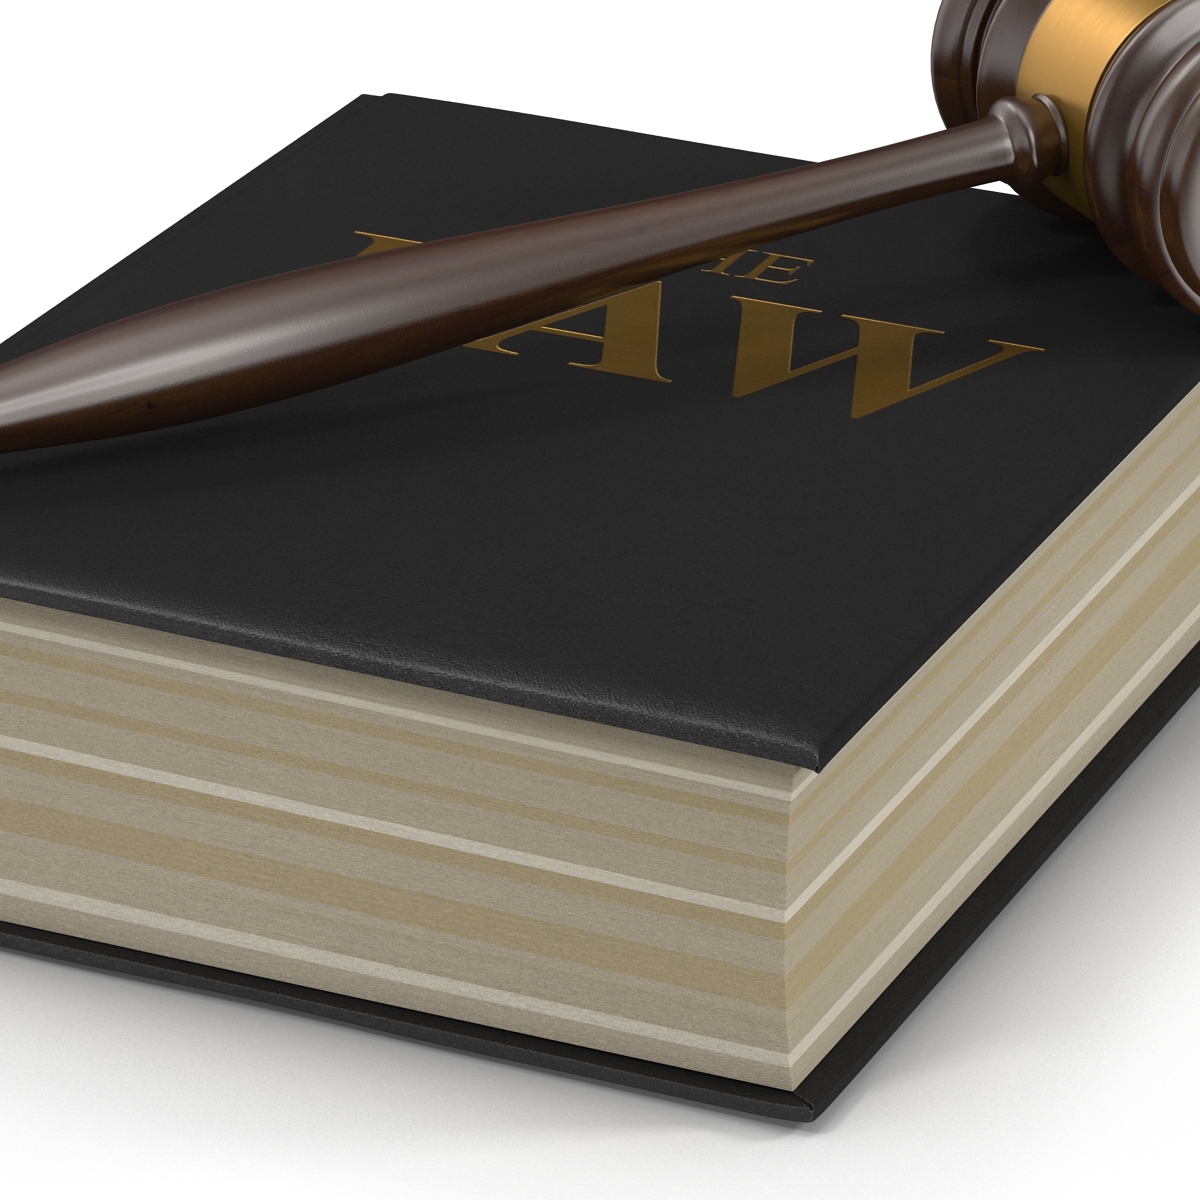 3d Law Book Gavel